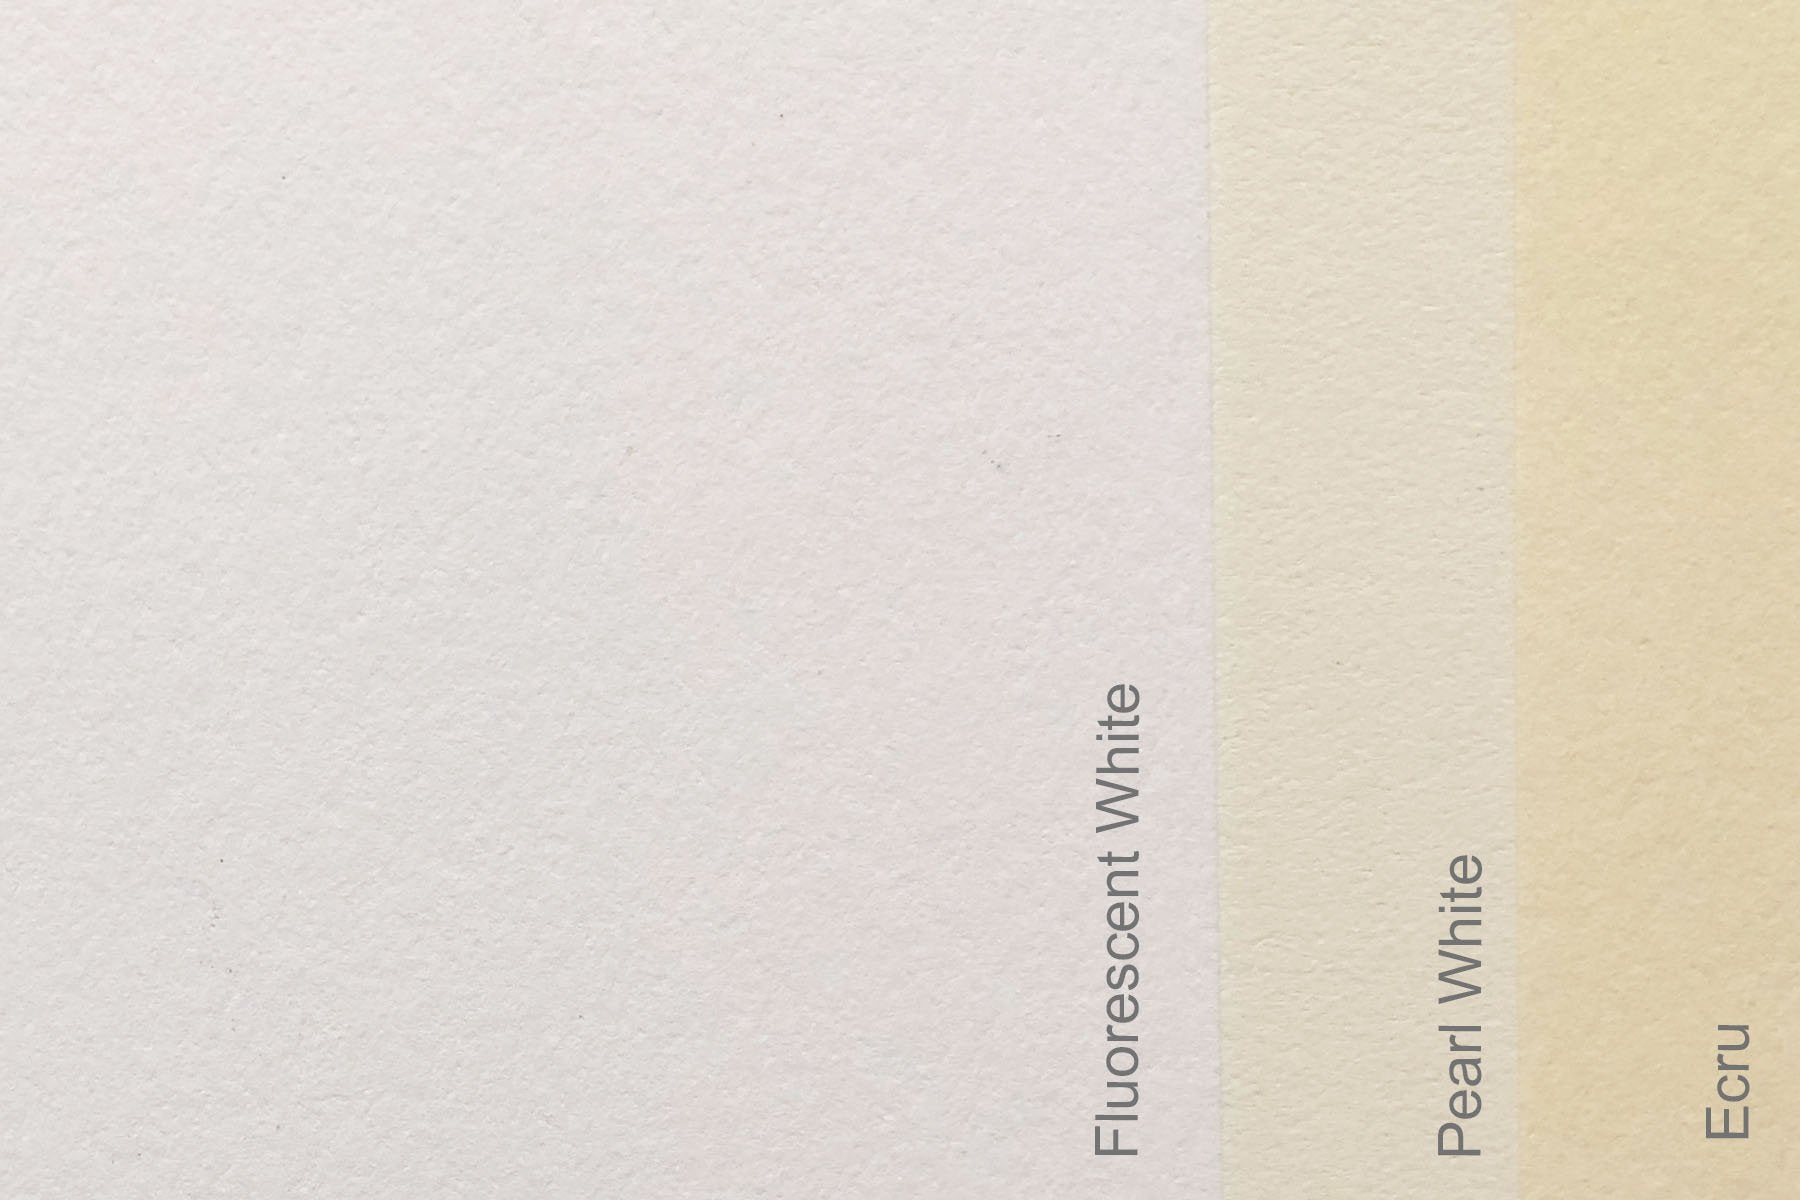 100% Cotton Fluorescent White - 8.5X11 Size Paper - 90lb Cover (243gsm) - 1